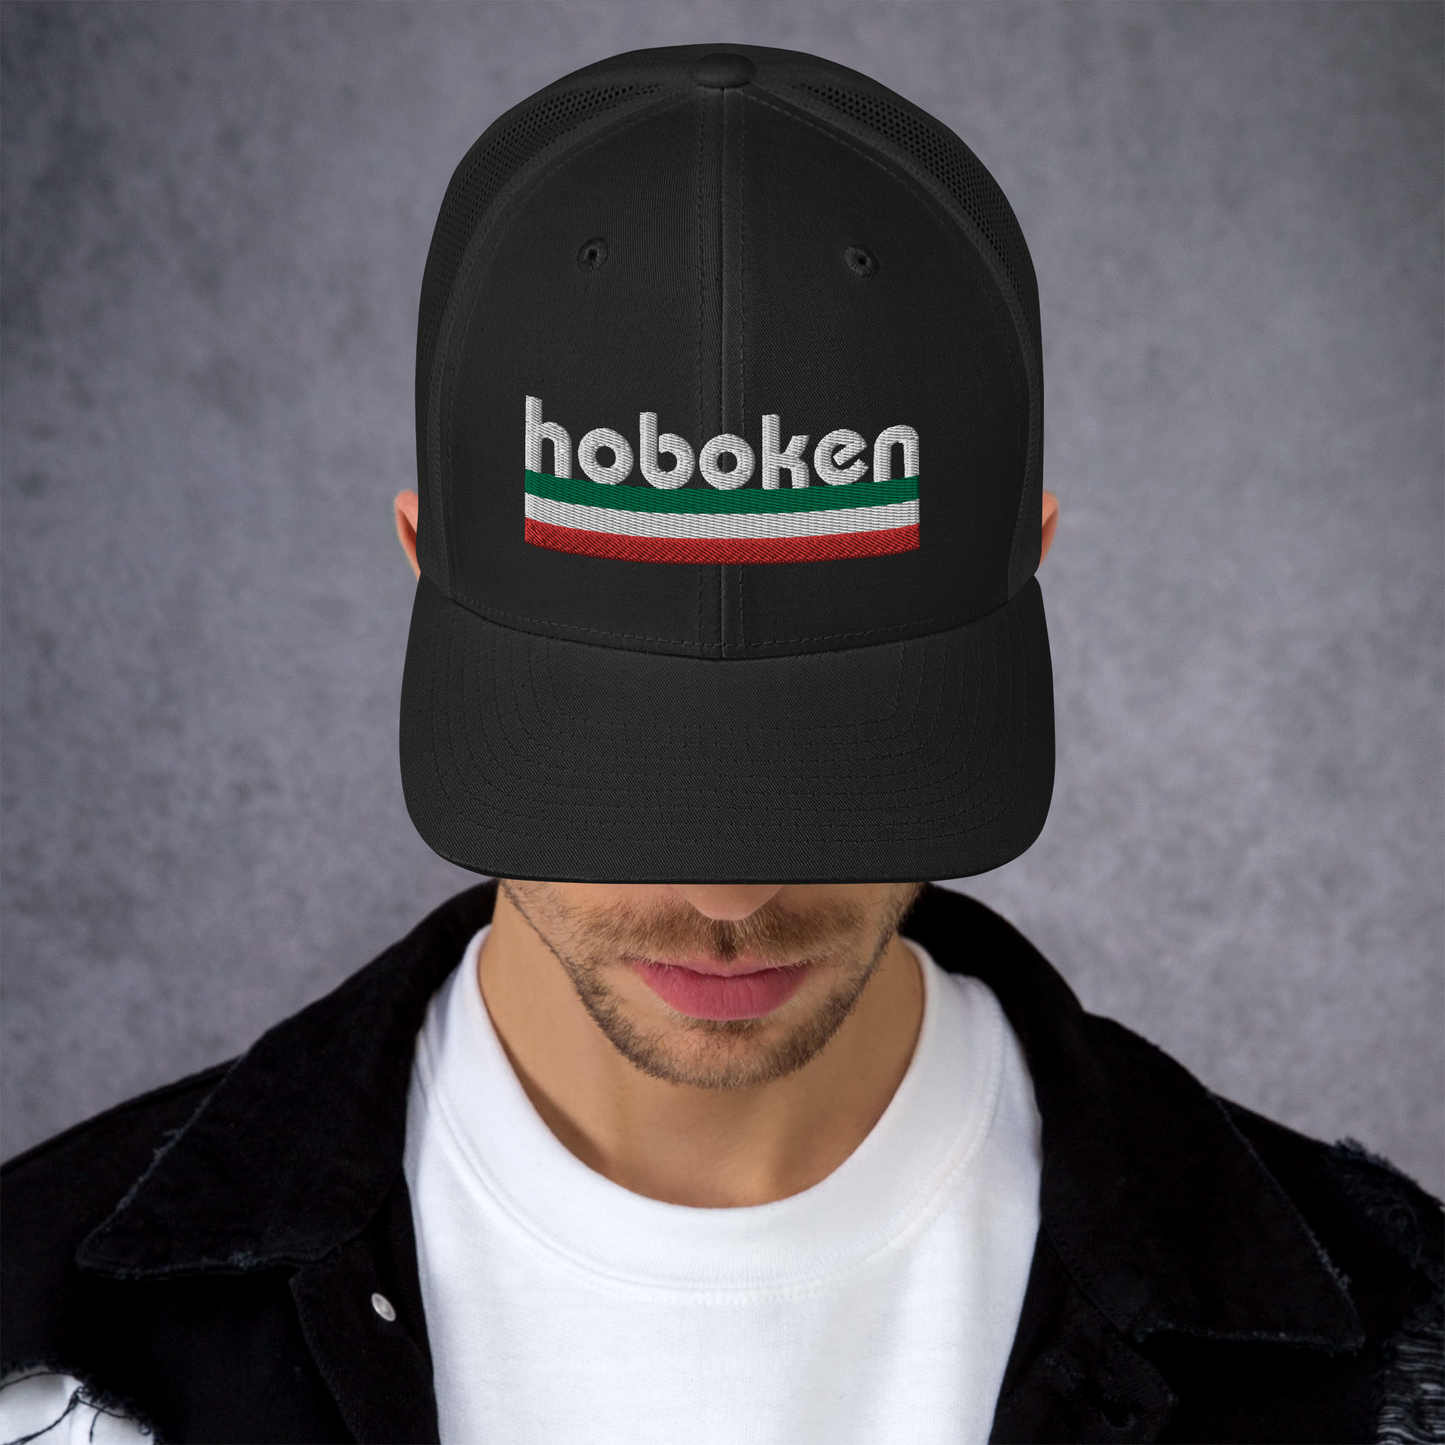 Hoboken Italian Pride Trucker Hat- Stylish Urban Headwear with Italian Flair